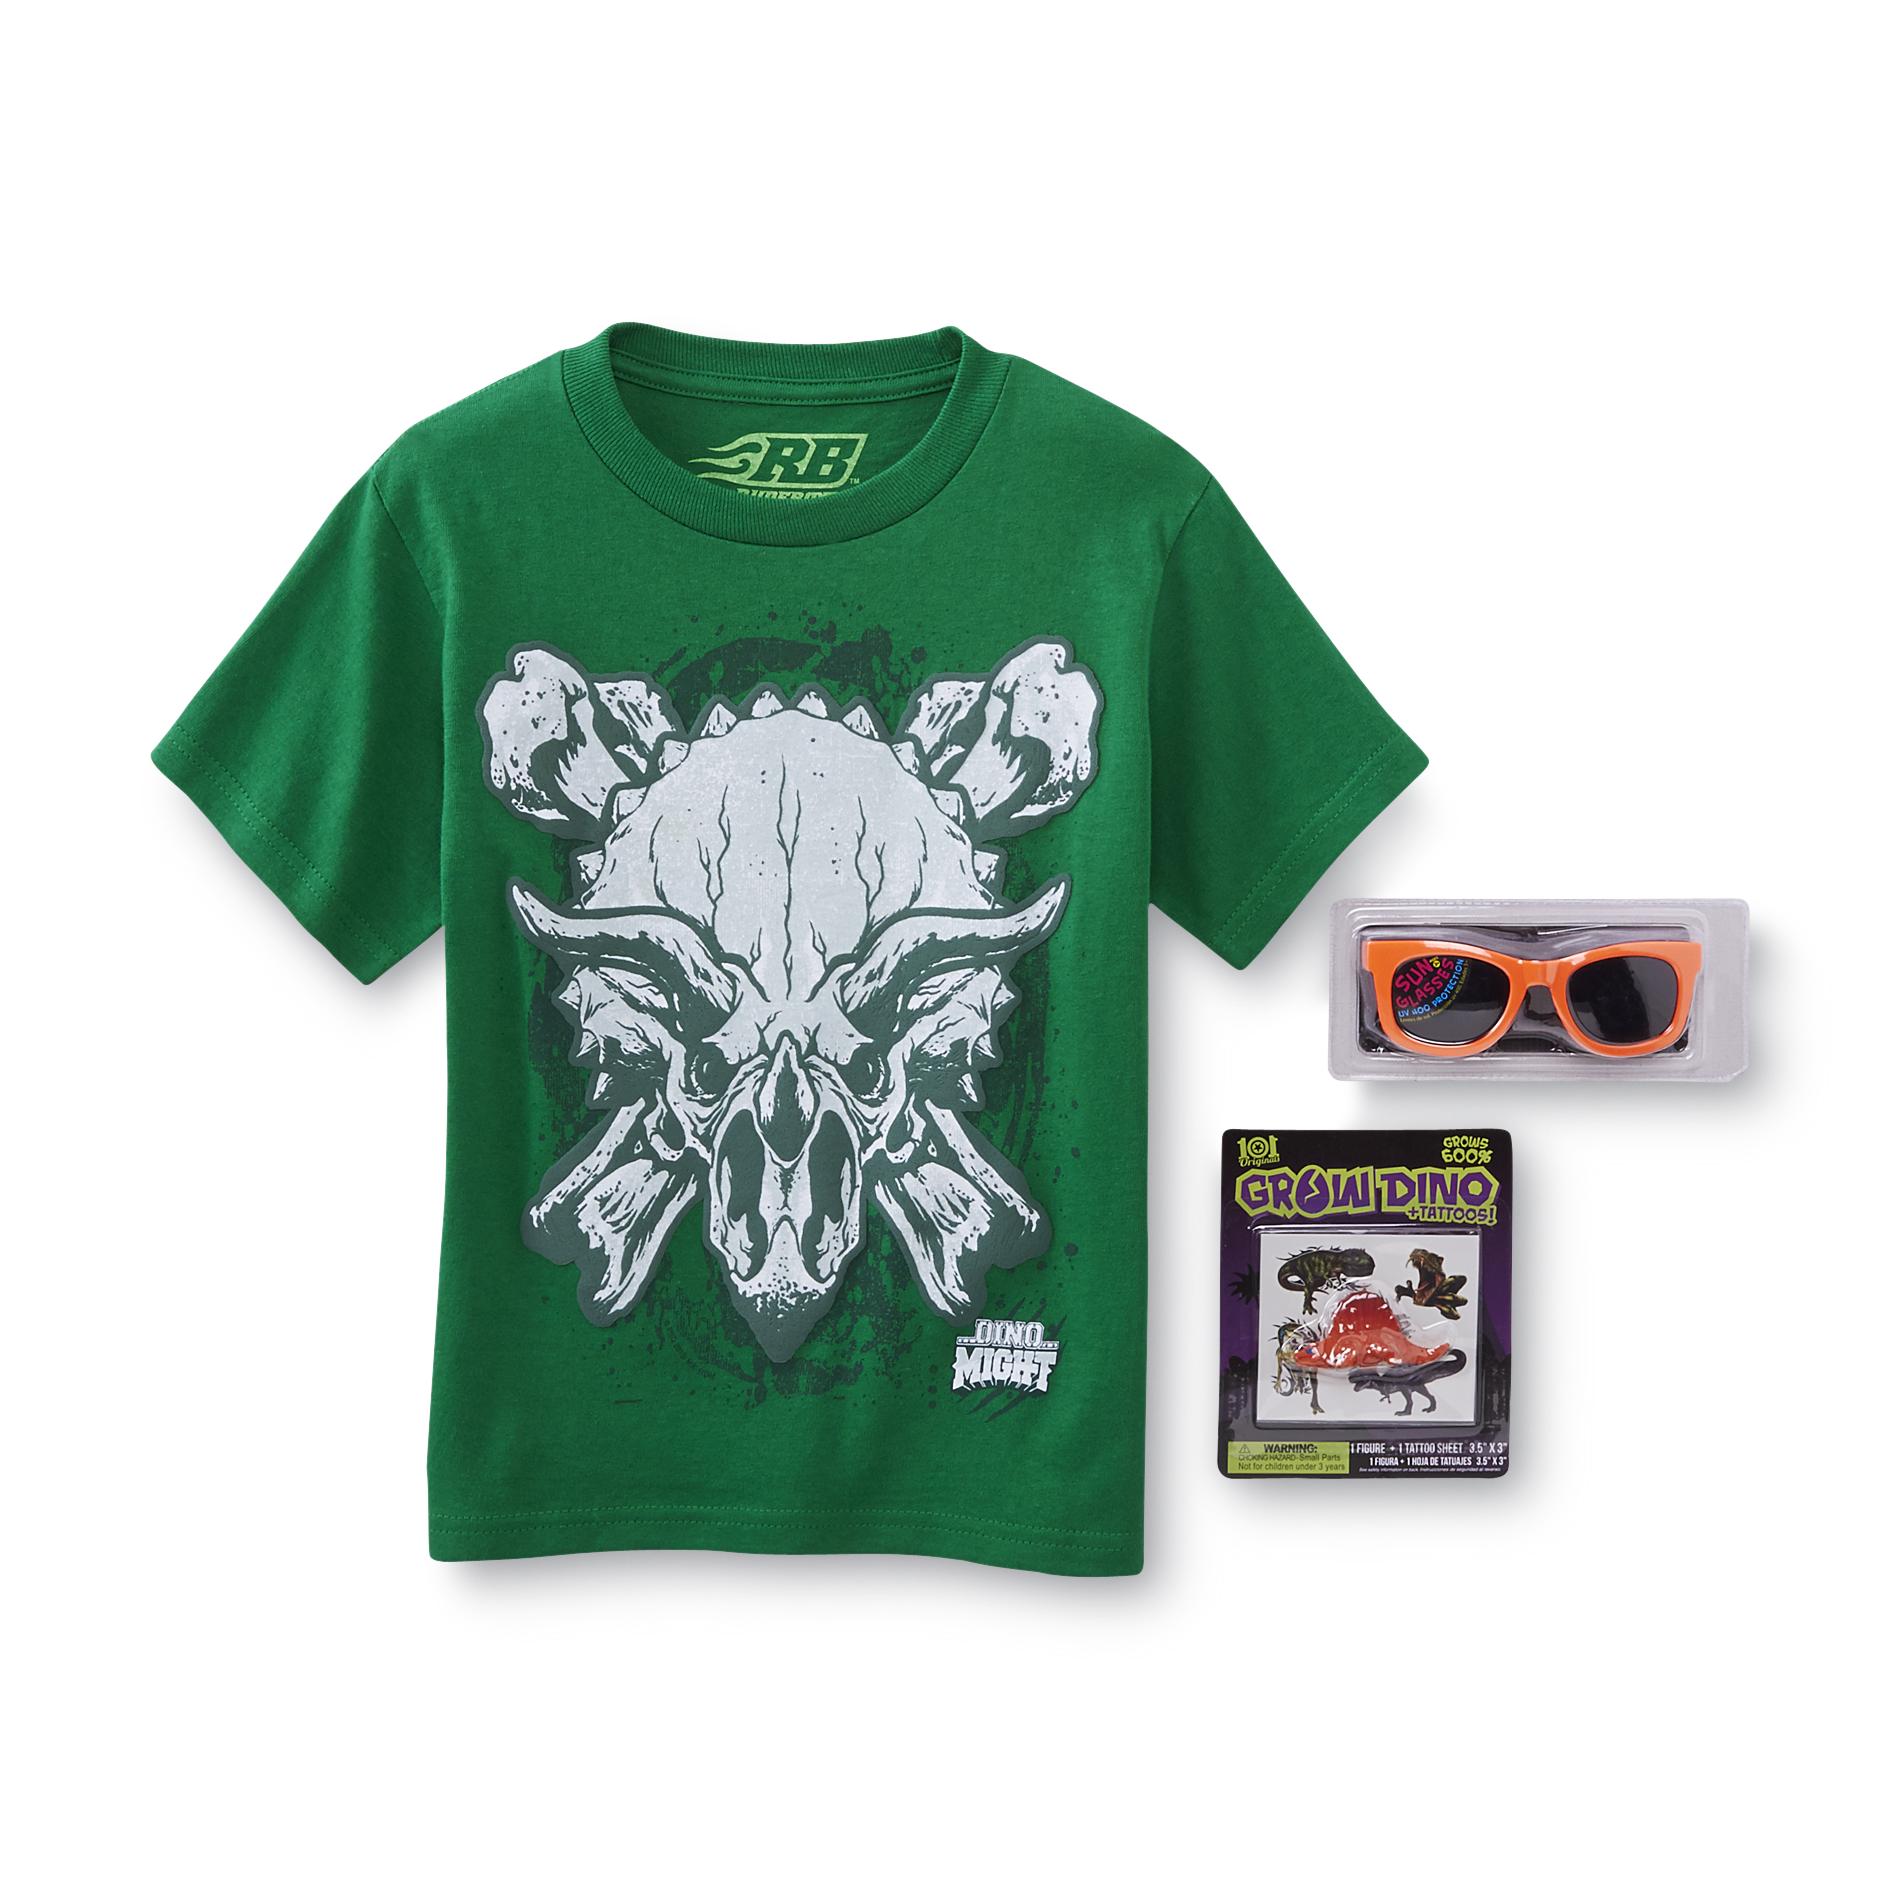 Rudeboyz Boy's T-Shirt  Sunglasses  Toy & Temporary Tattoos - Dinosaur